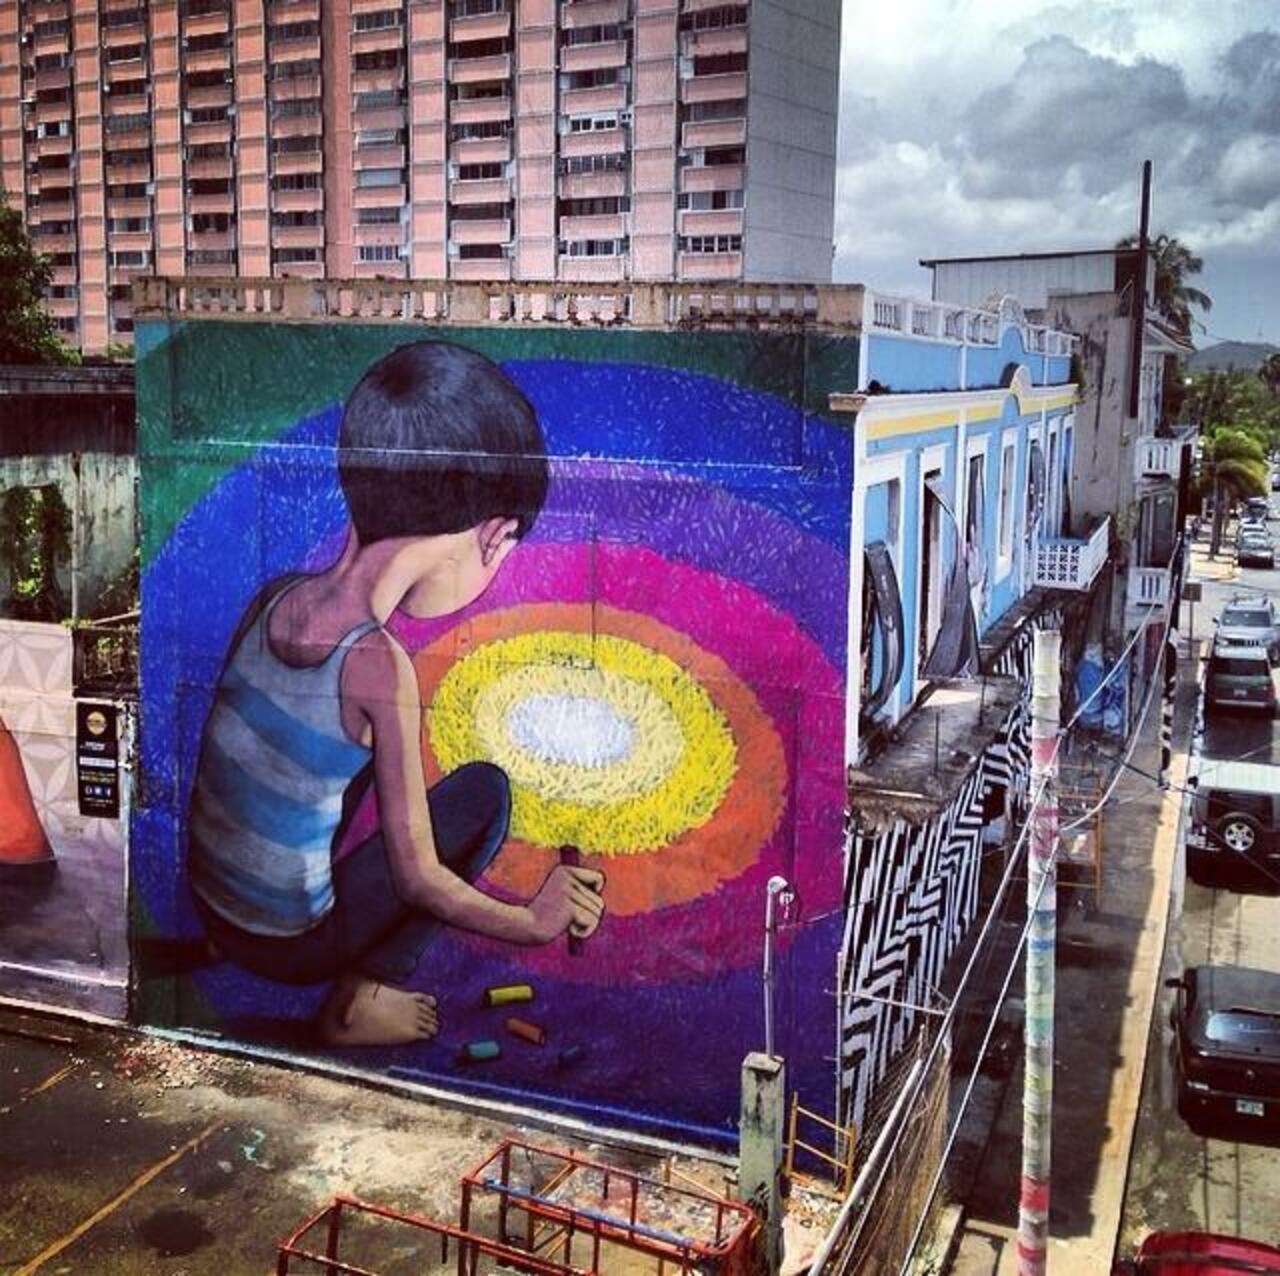 Artist Seth Globepainter new large scale Street Art mural in Puerto Rico #art #mural #graffiti #streetart http://t.co/XvszpiNOqr